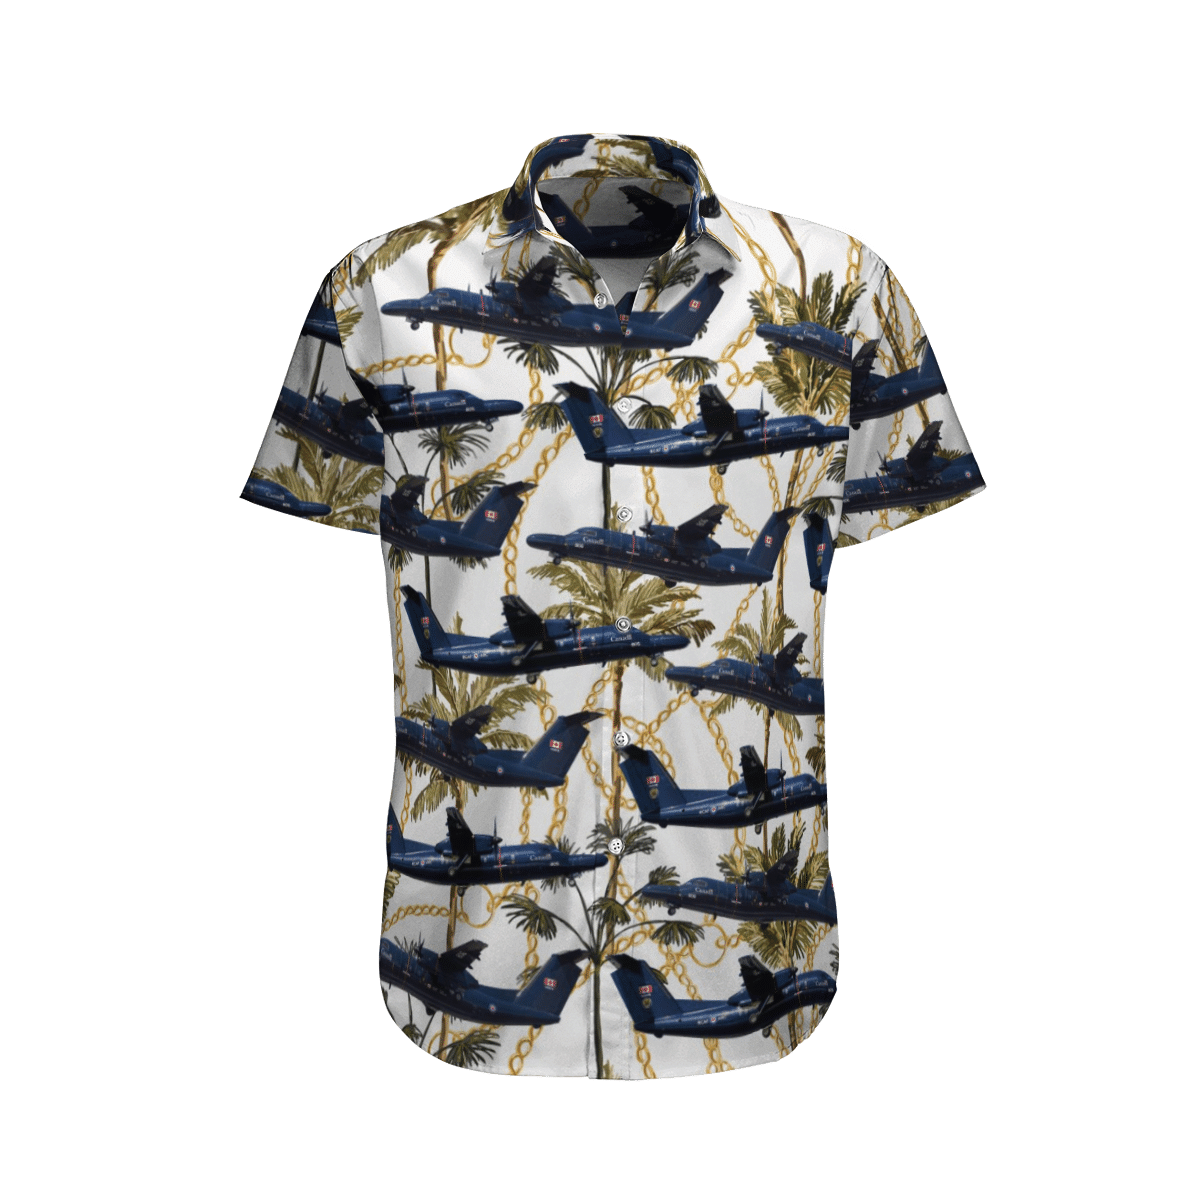 Get a new Hawaiian shirt to enjoy summer vacation 160